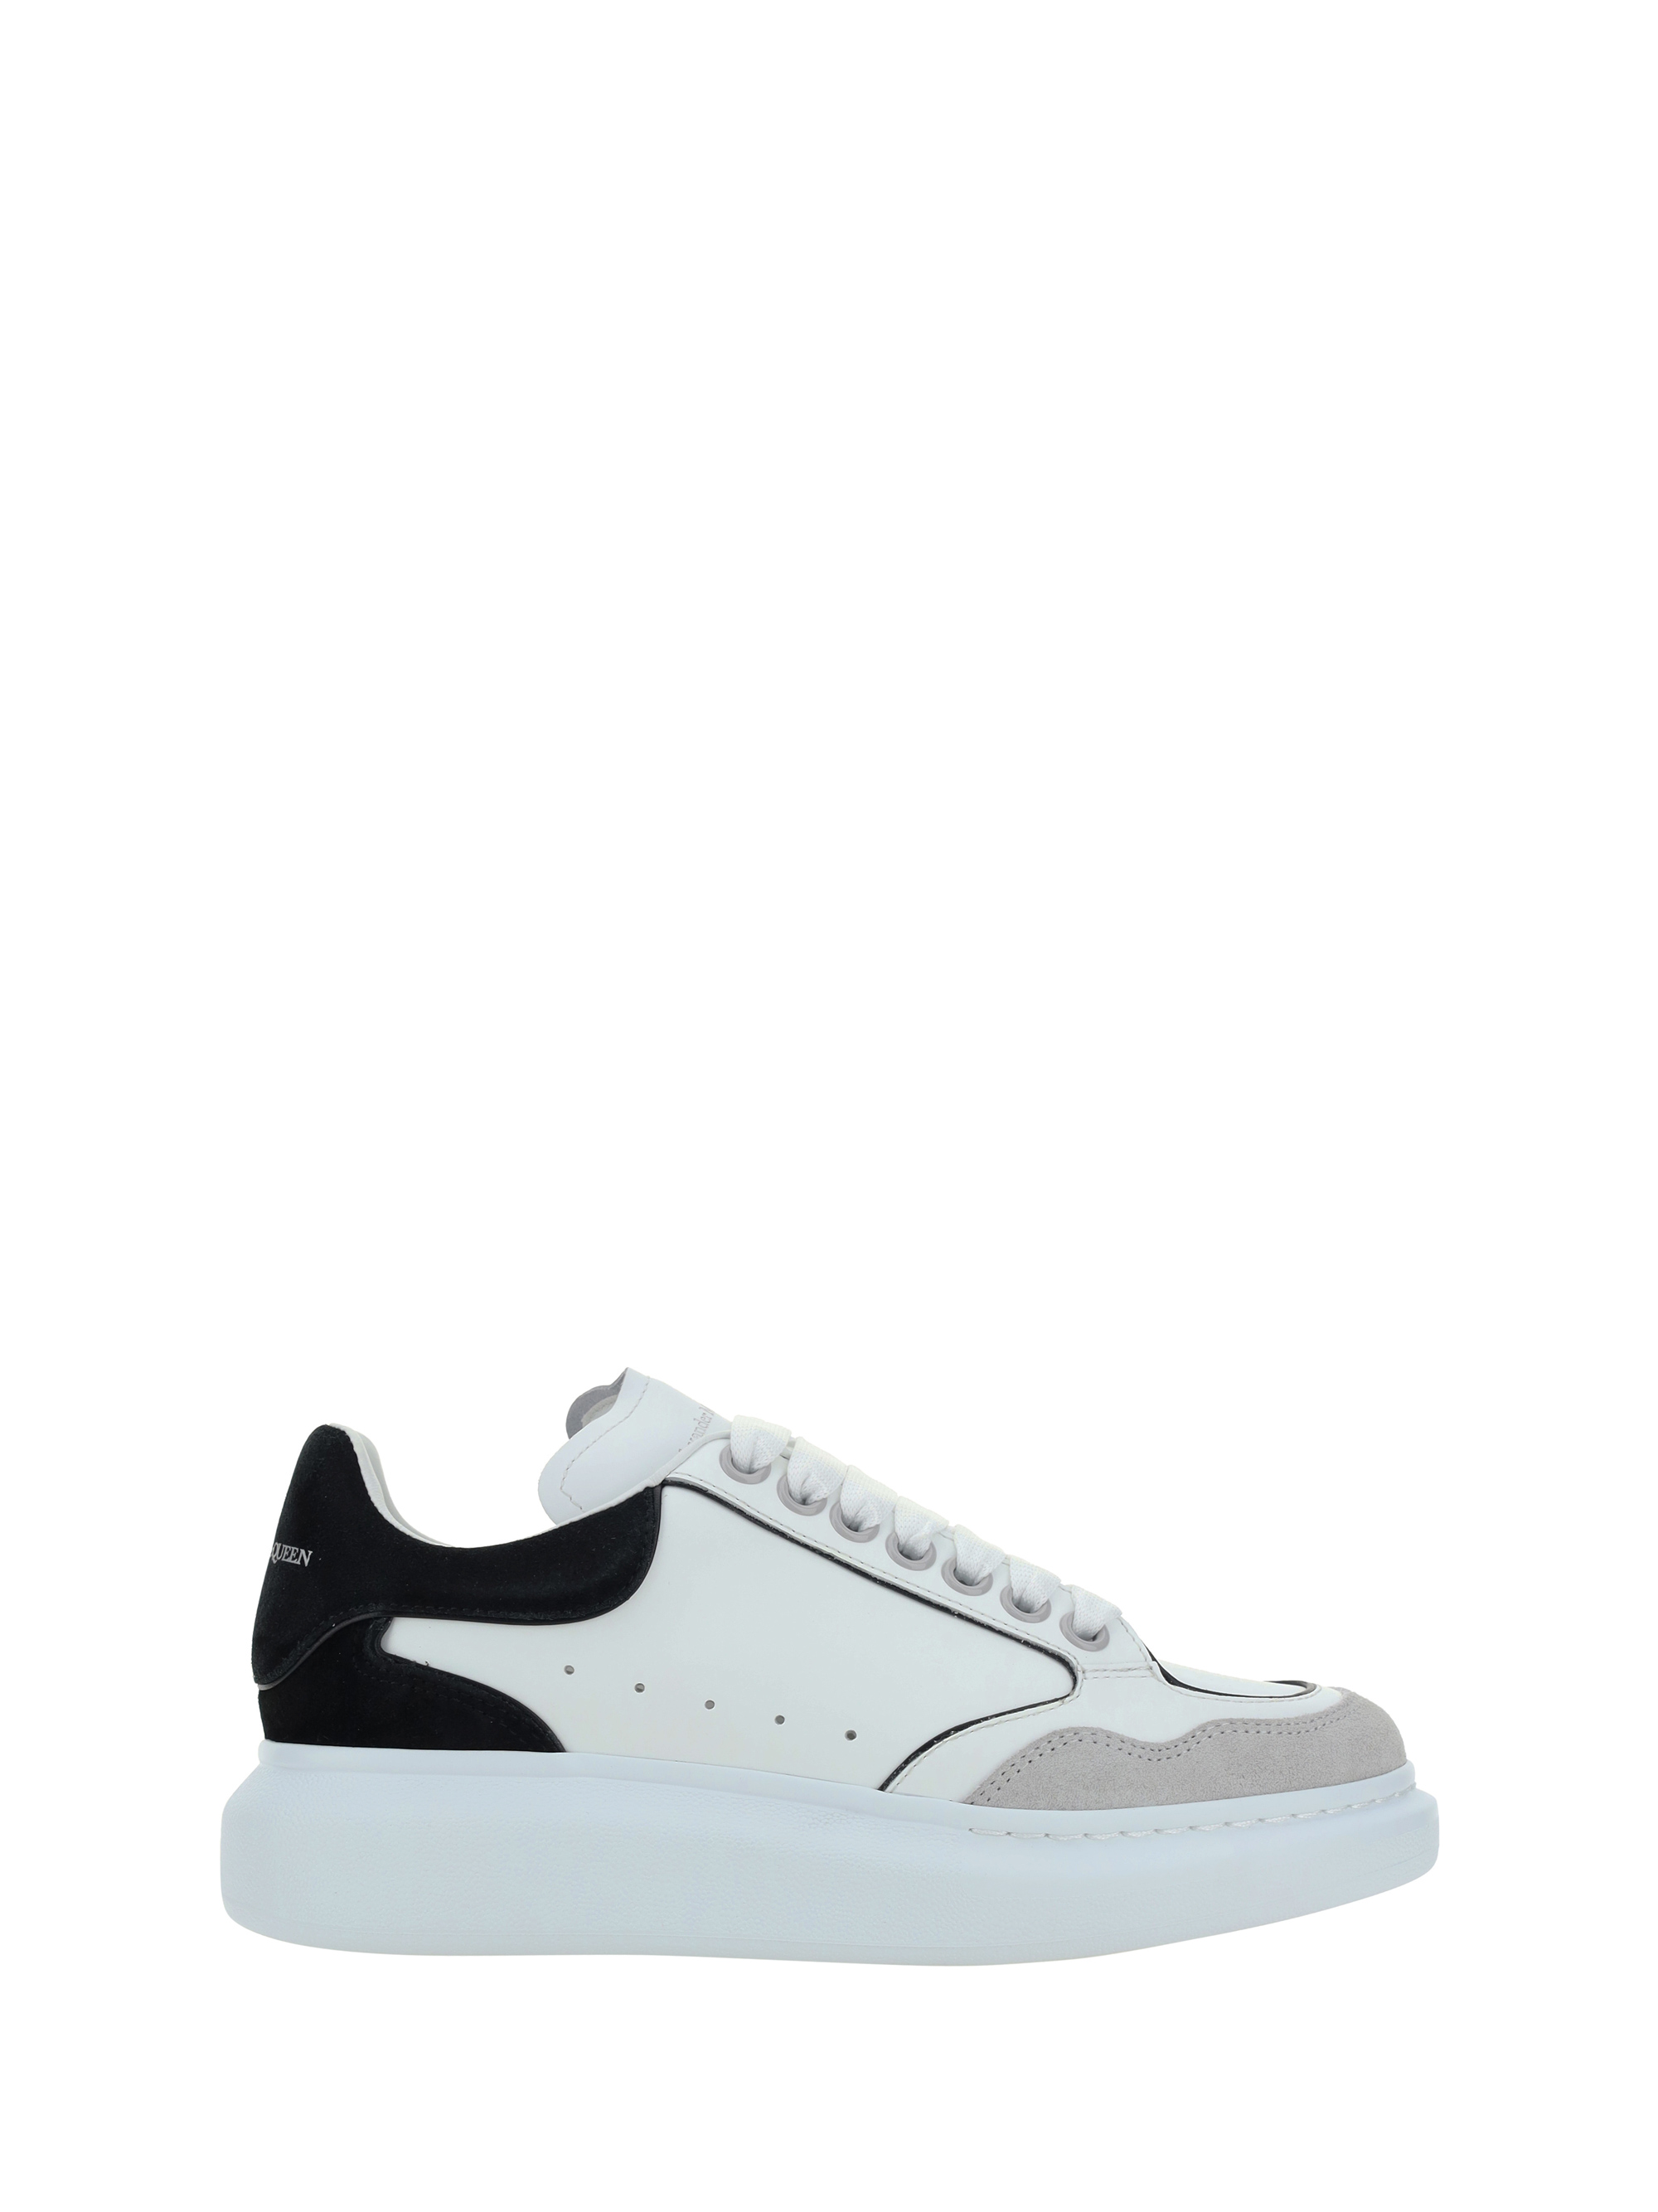 Alexander Mcqueen Sneakers In White/luna/black